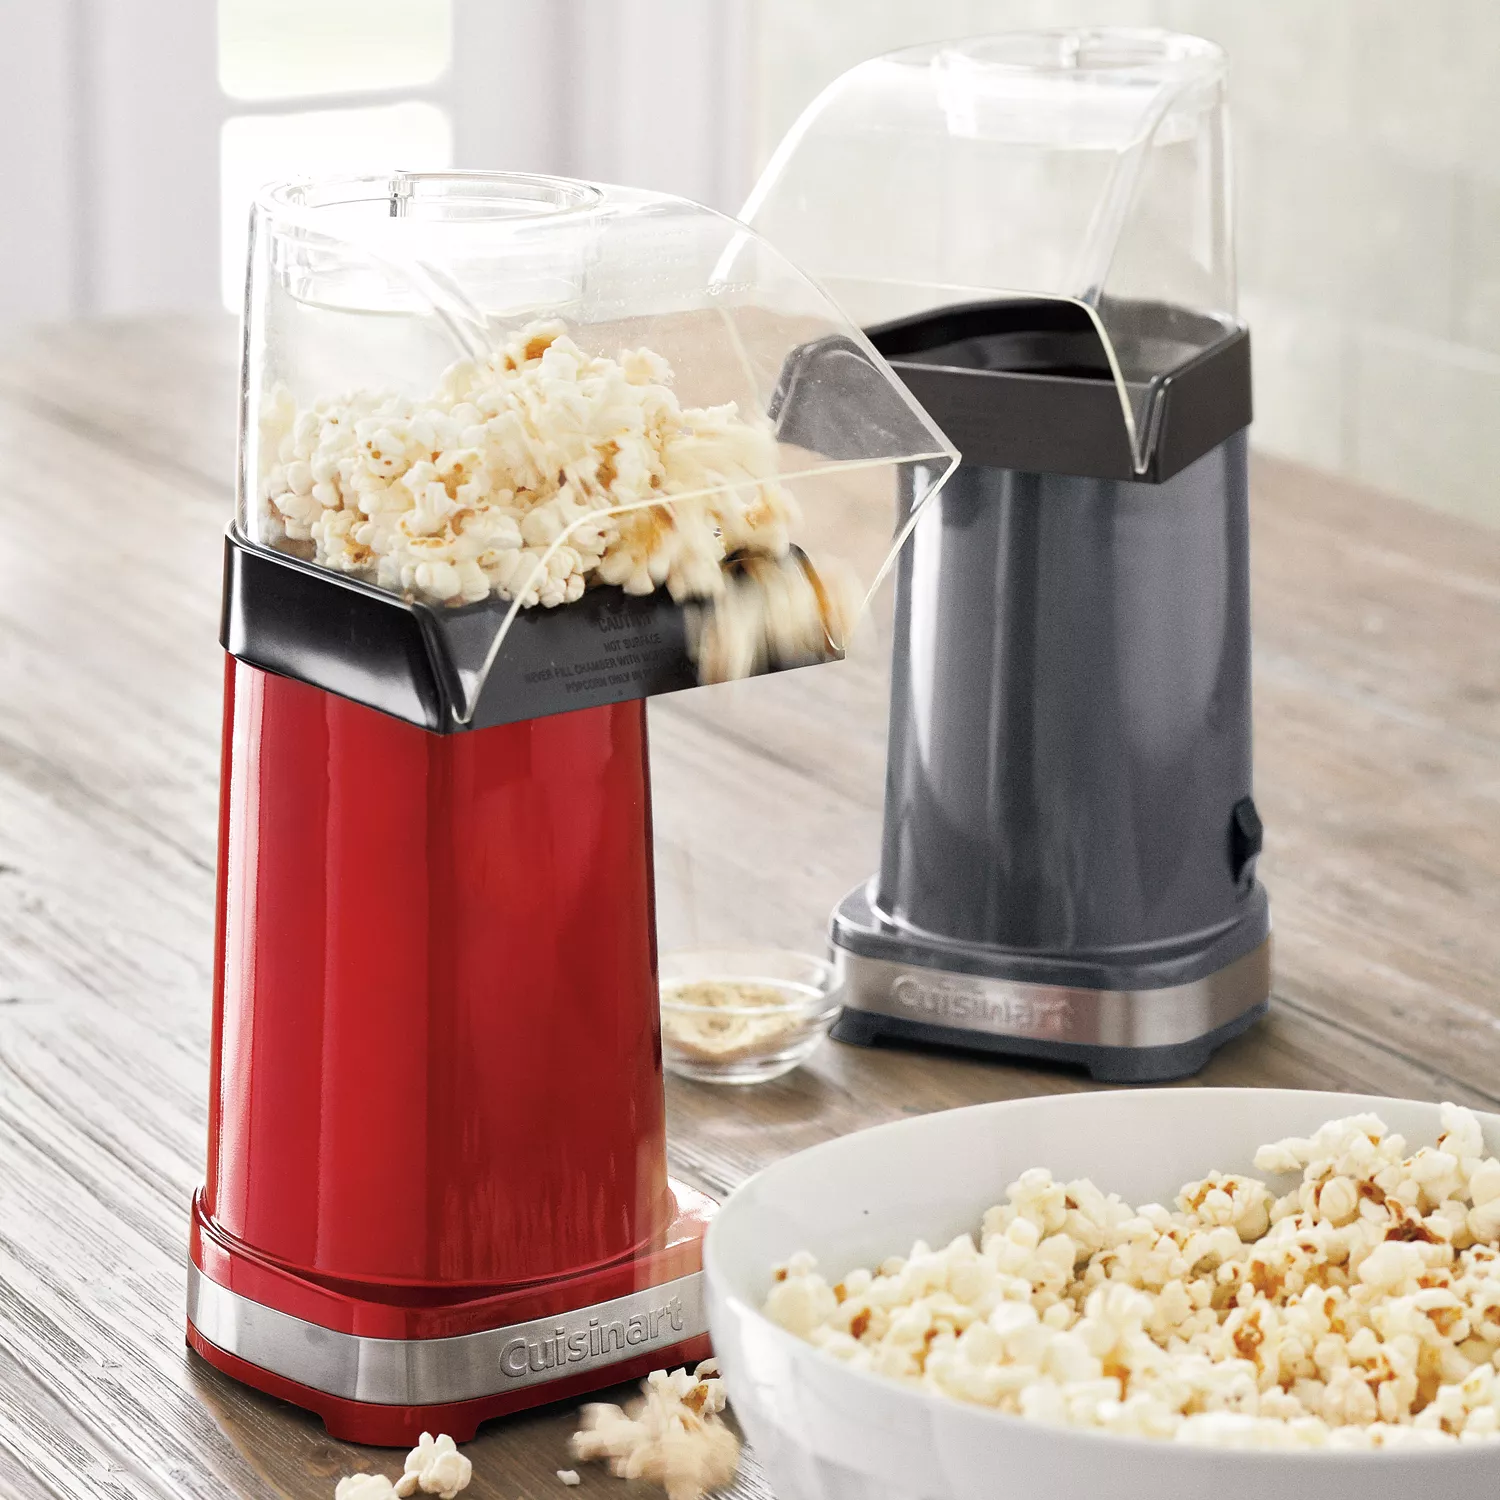 Cuisinart Easy Pop Popcorn Machine